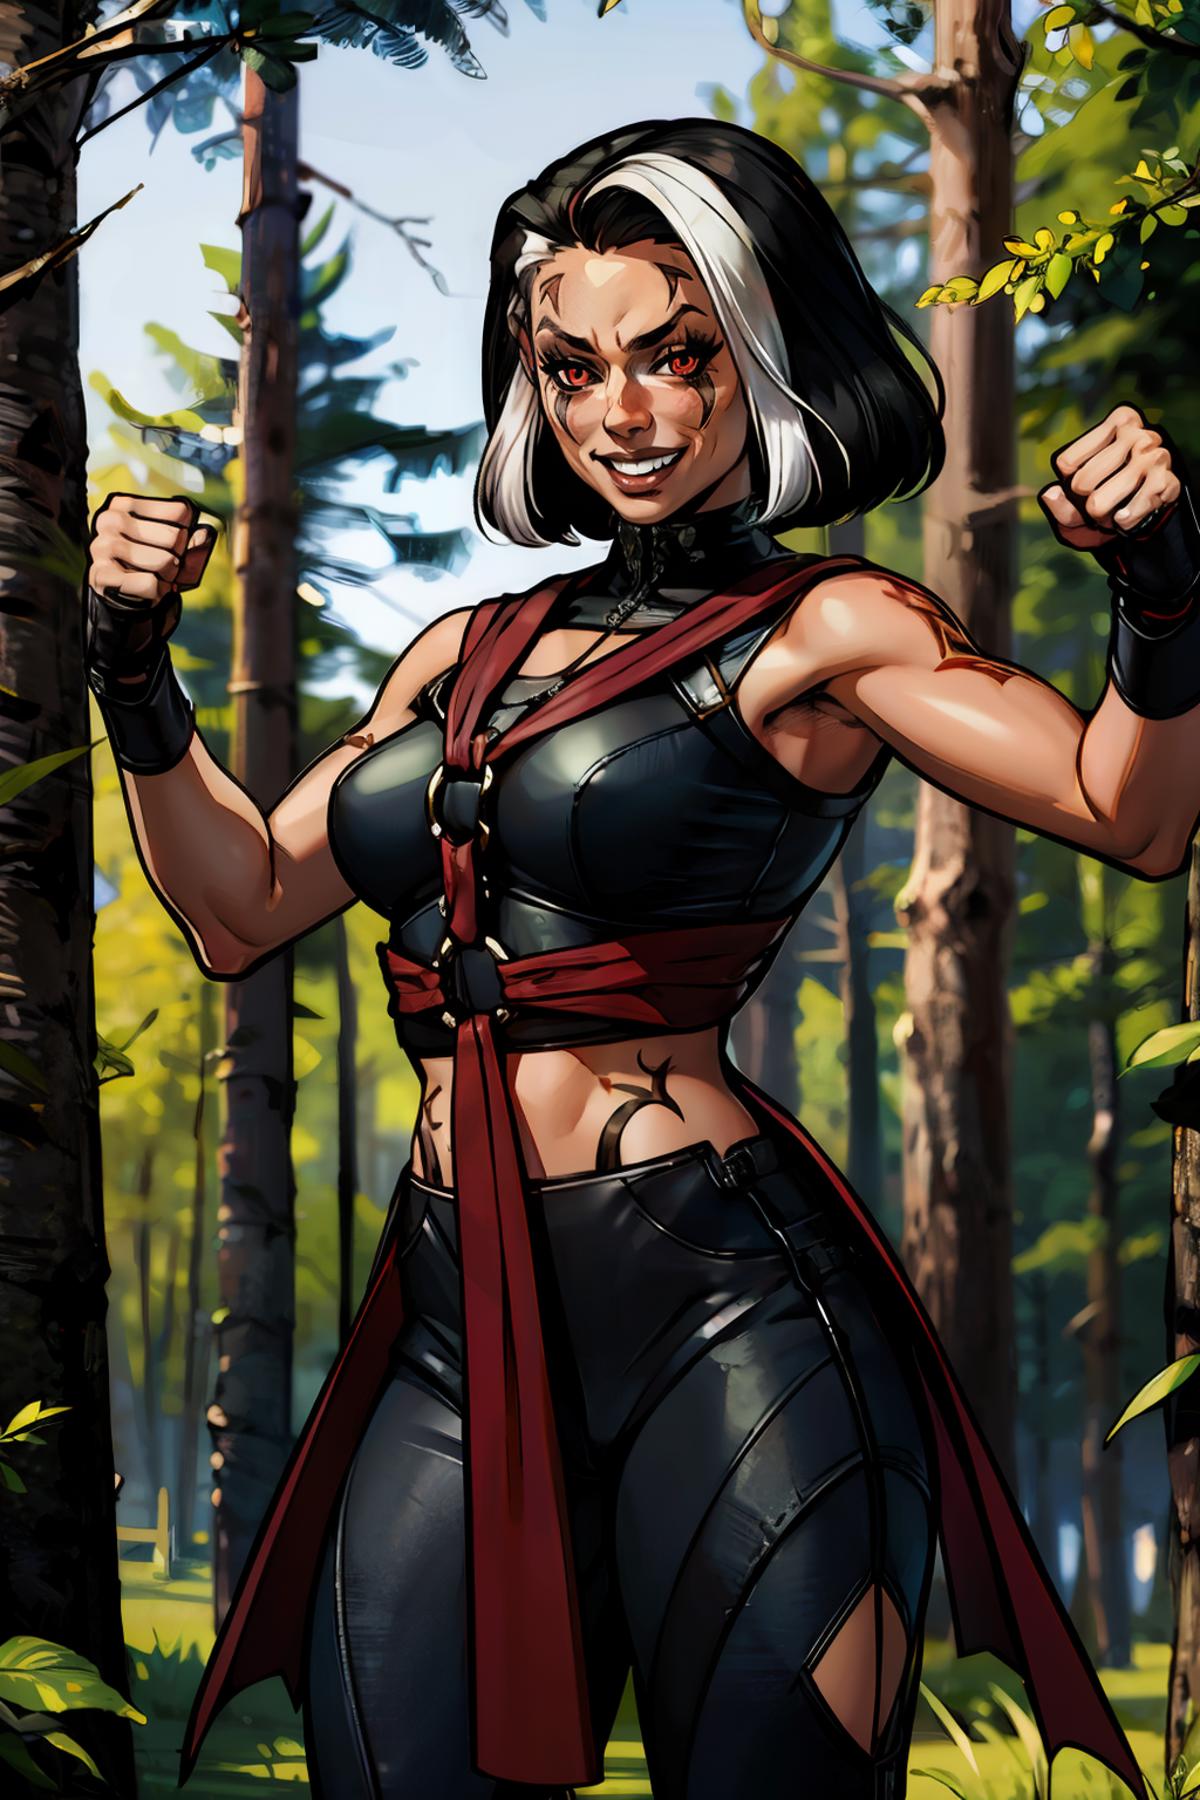 Sareena - Mortal Kombat (MK1) image by wikkitikki